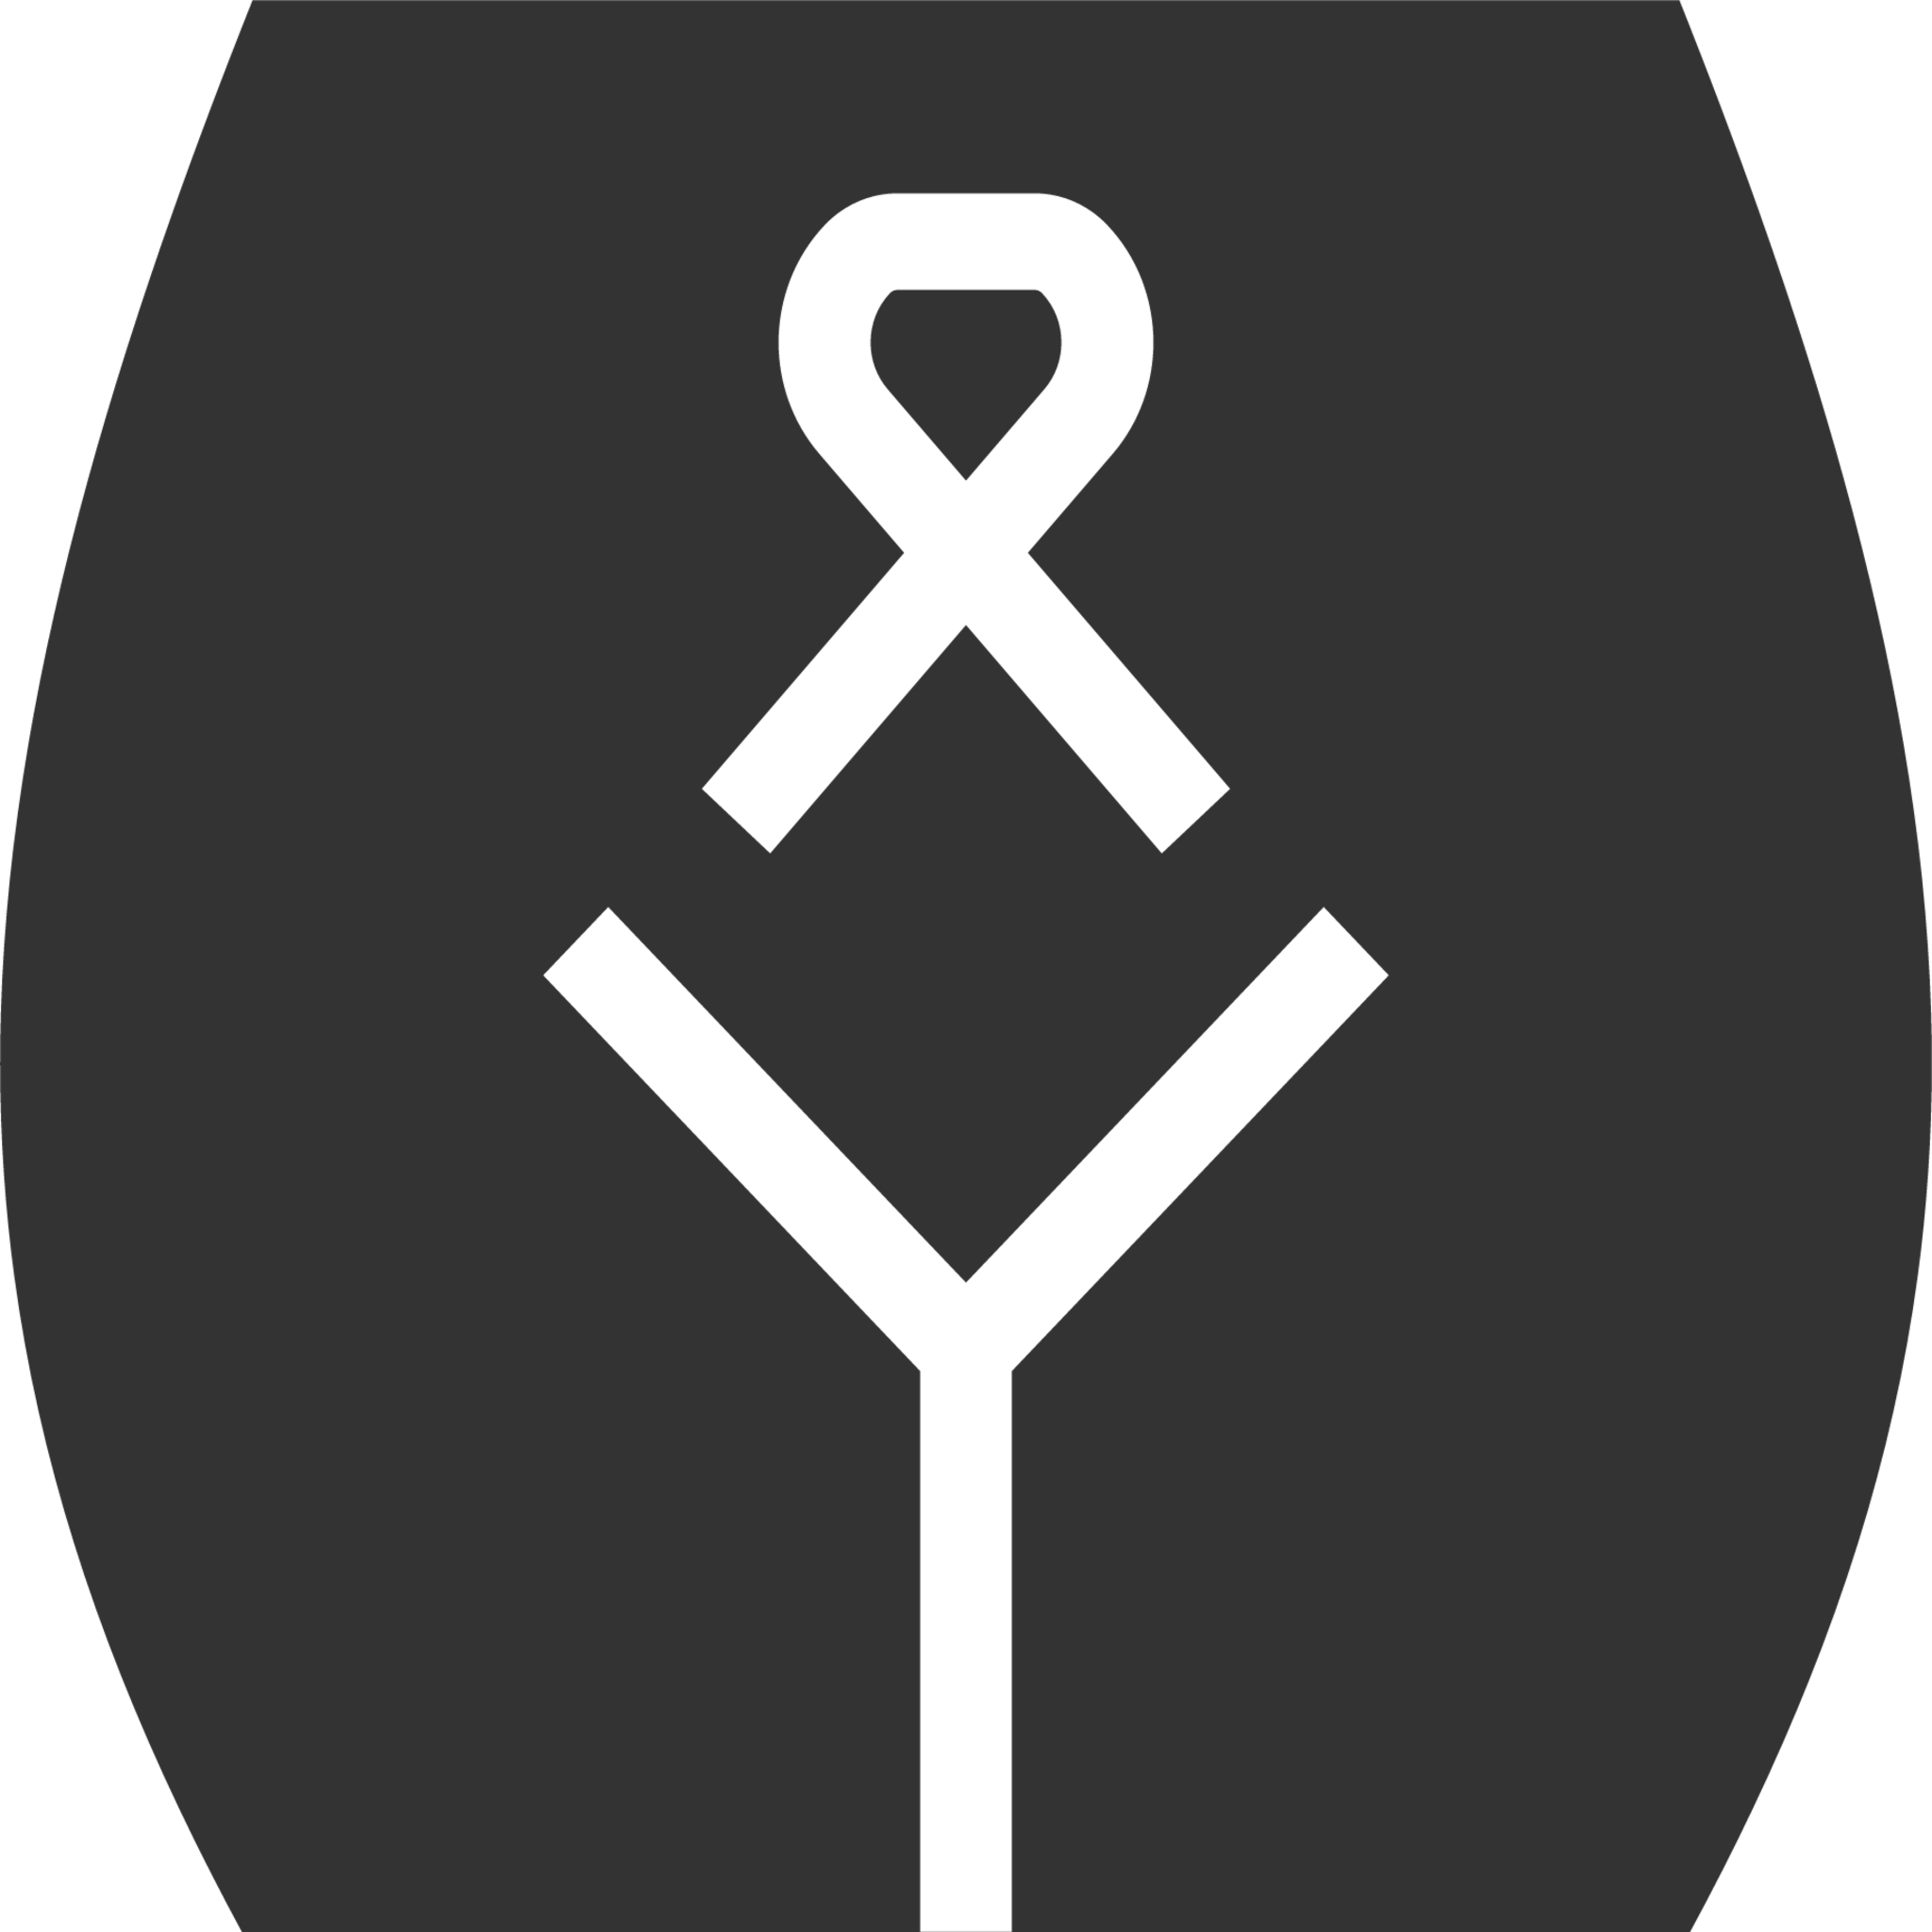 Cervical Cancer icon